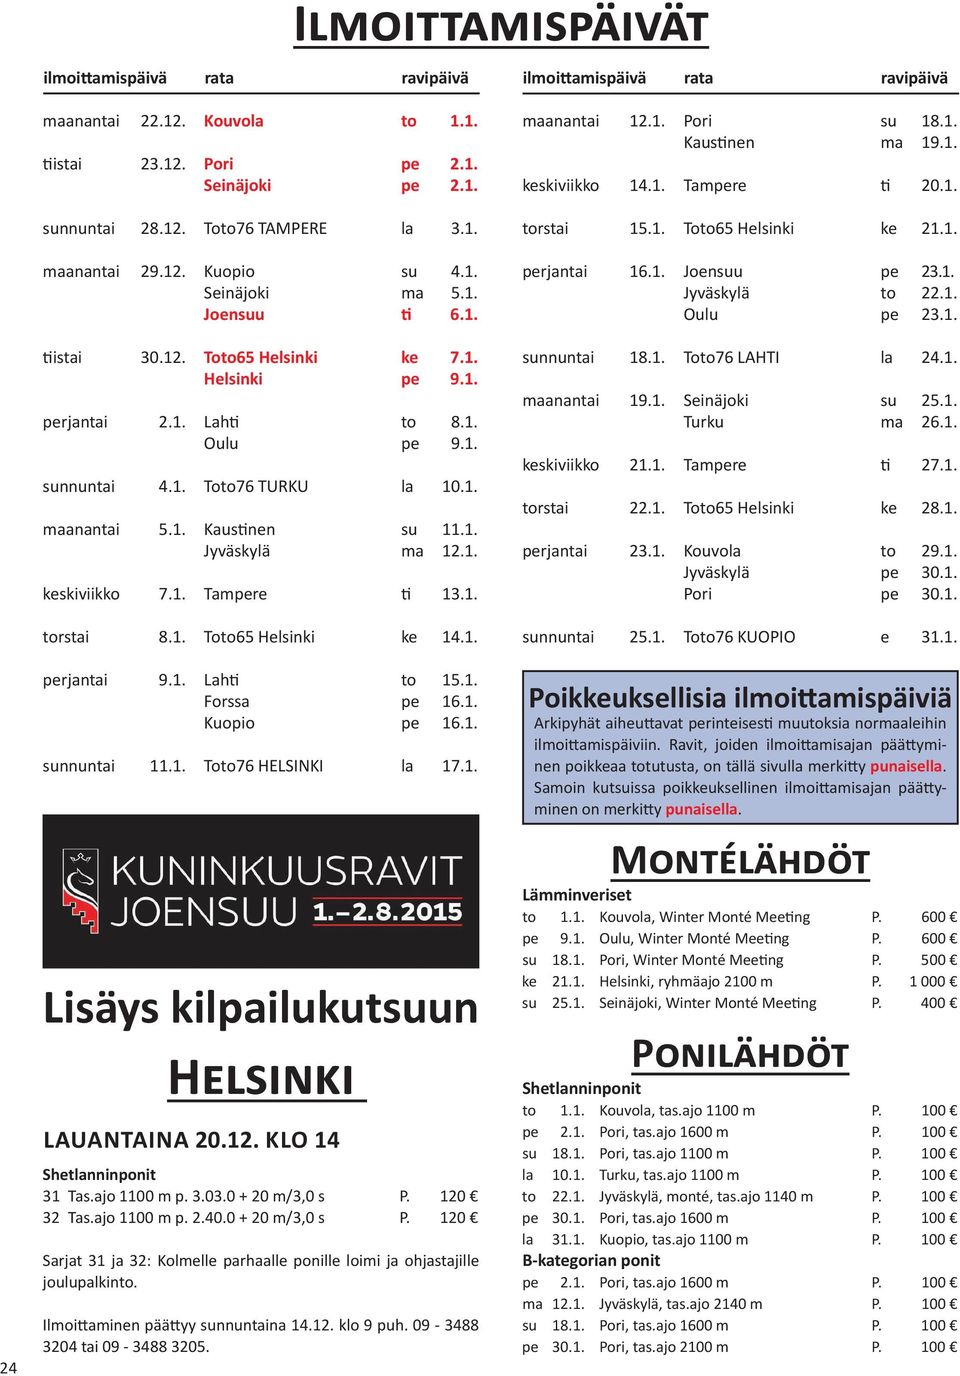 1. maanantai 5.1. Kaustinen su 11.1. Jyväskylä ma 12.1. keskiviikko 7.1. Tampere ti 13.1. torstai 8.1. Toto65 Helsinki ke 14.1. perjantai 9.1. Lahti to 15.1. Forssa pe 16.1. Kuopio pe 16.1. sunnuntai 11.